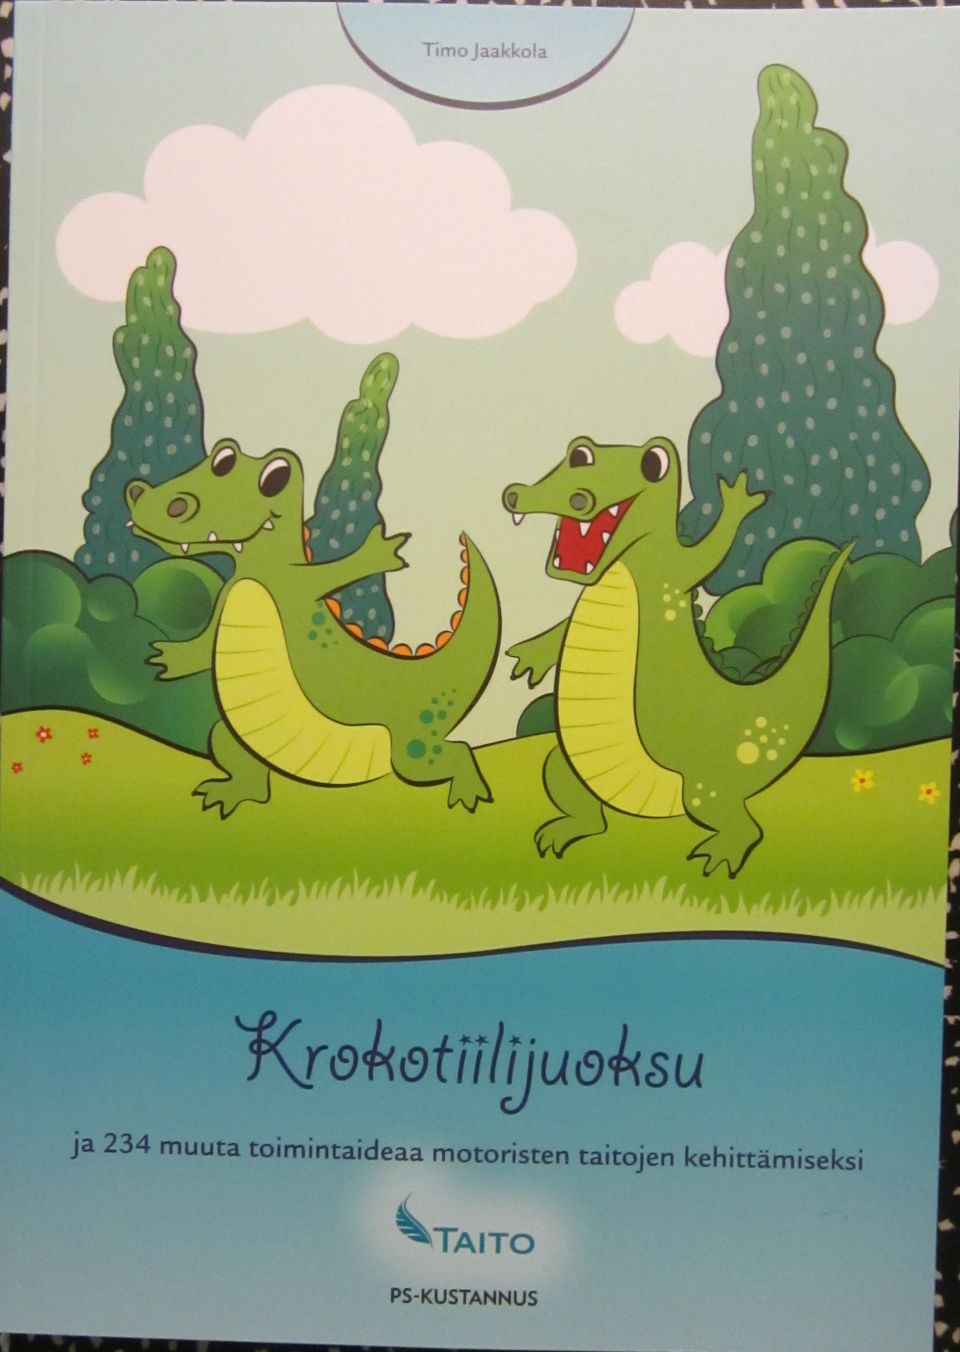 Timo Jaakkola: Krokotiilijuoksu